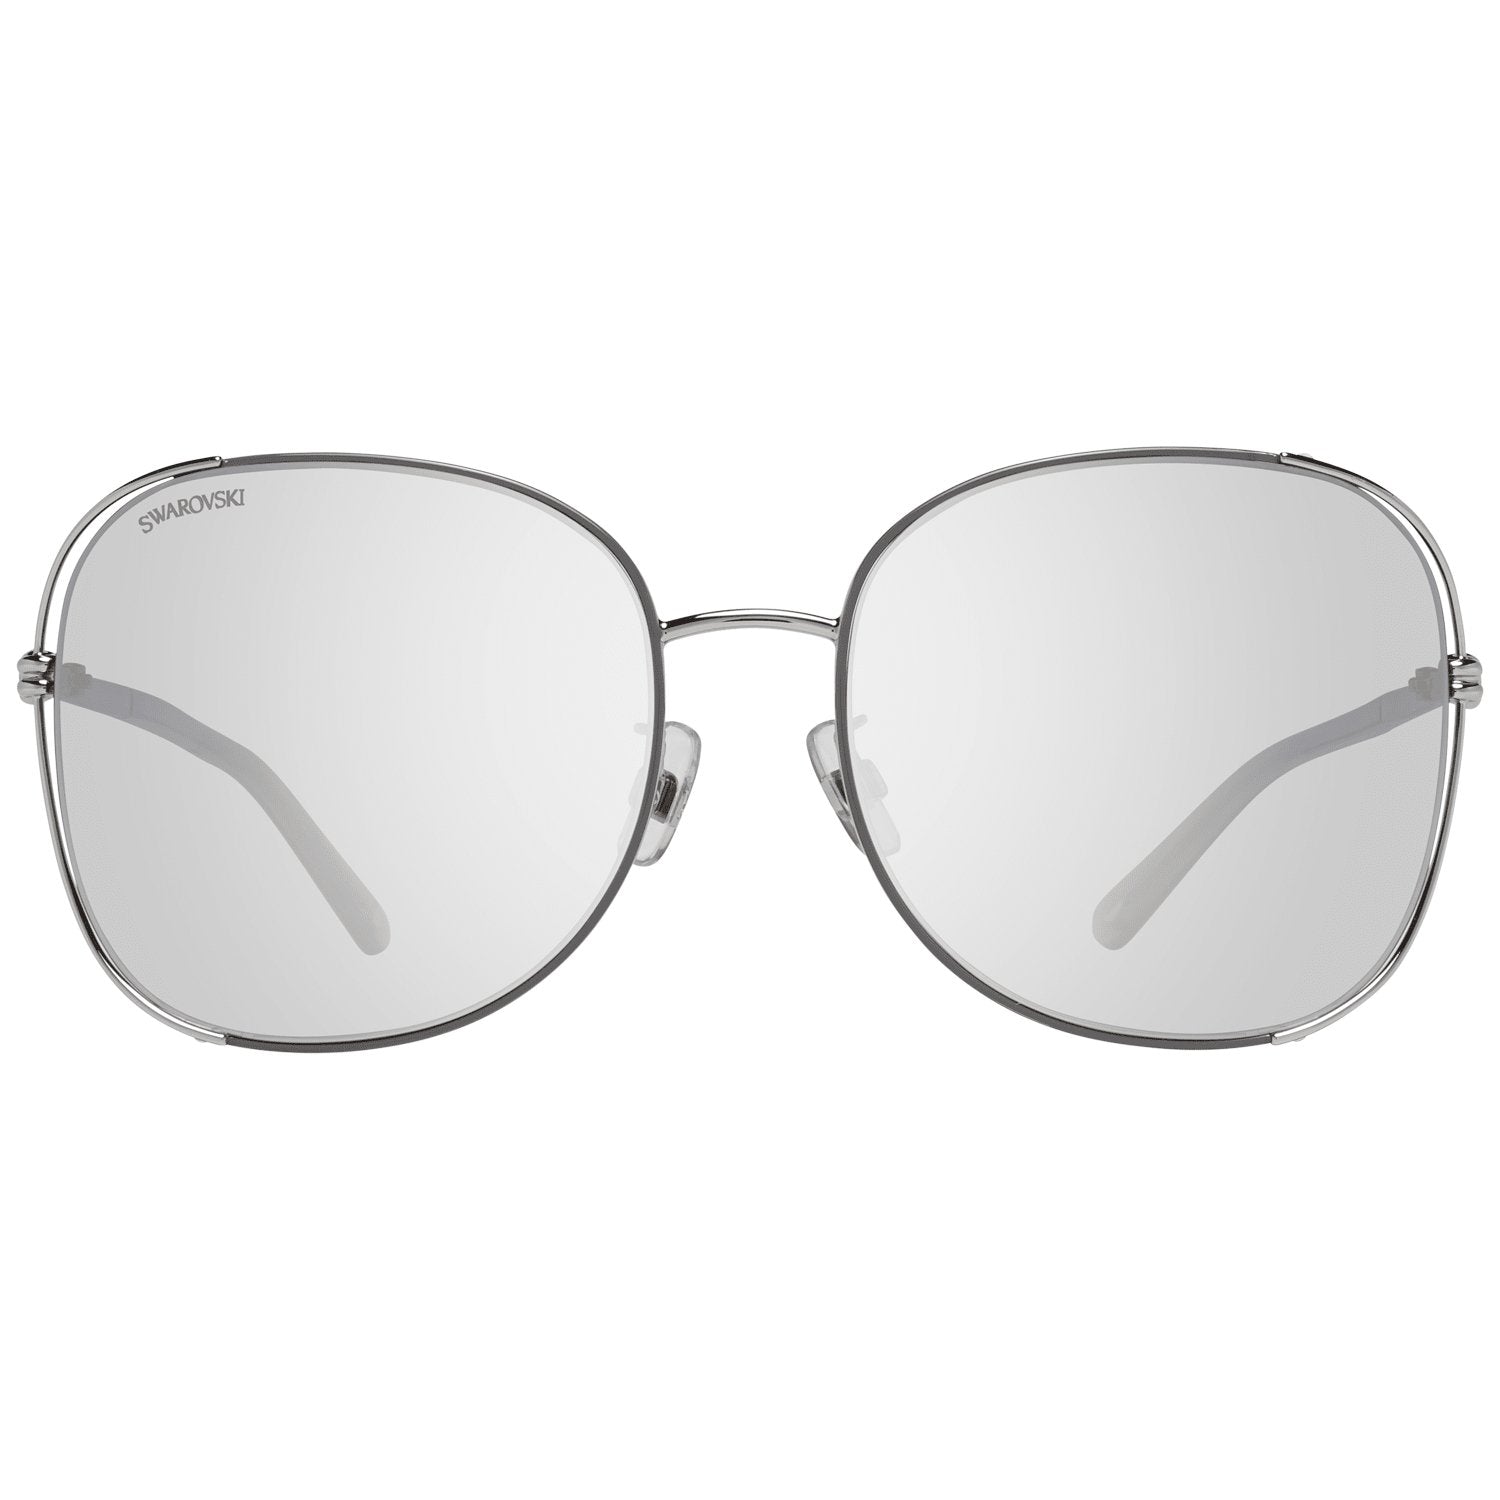 Swarovski Grey Sunglasses for Woman - Fizigo